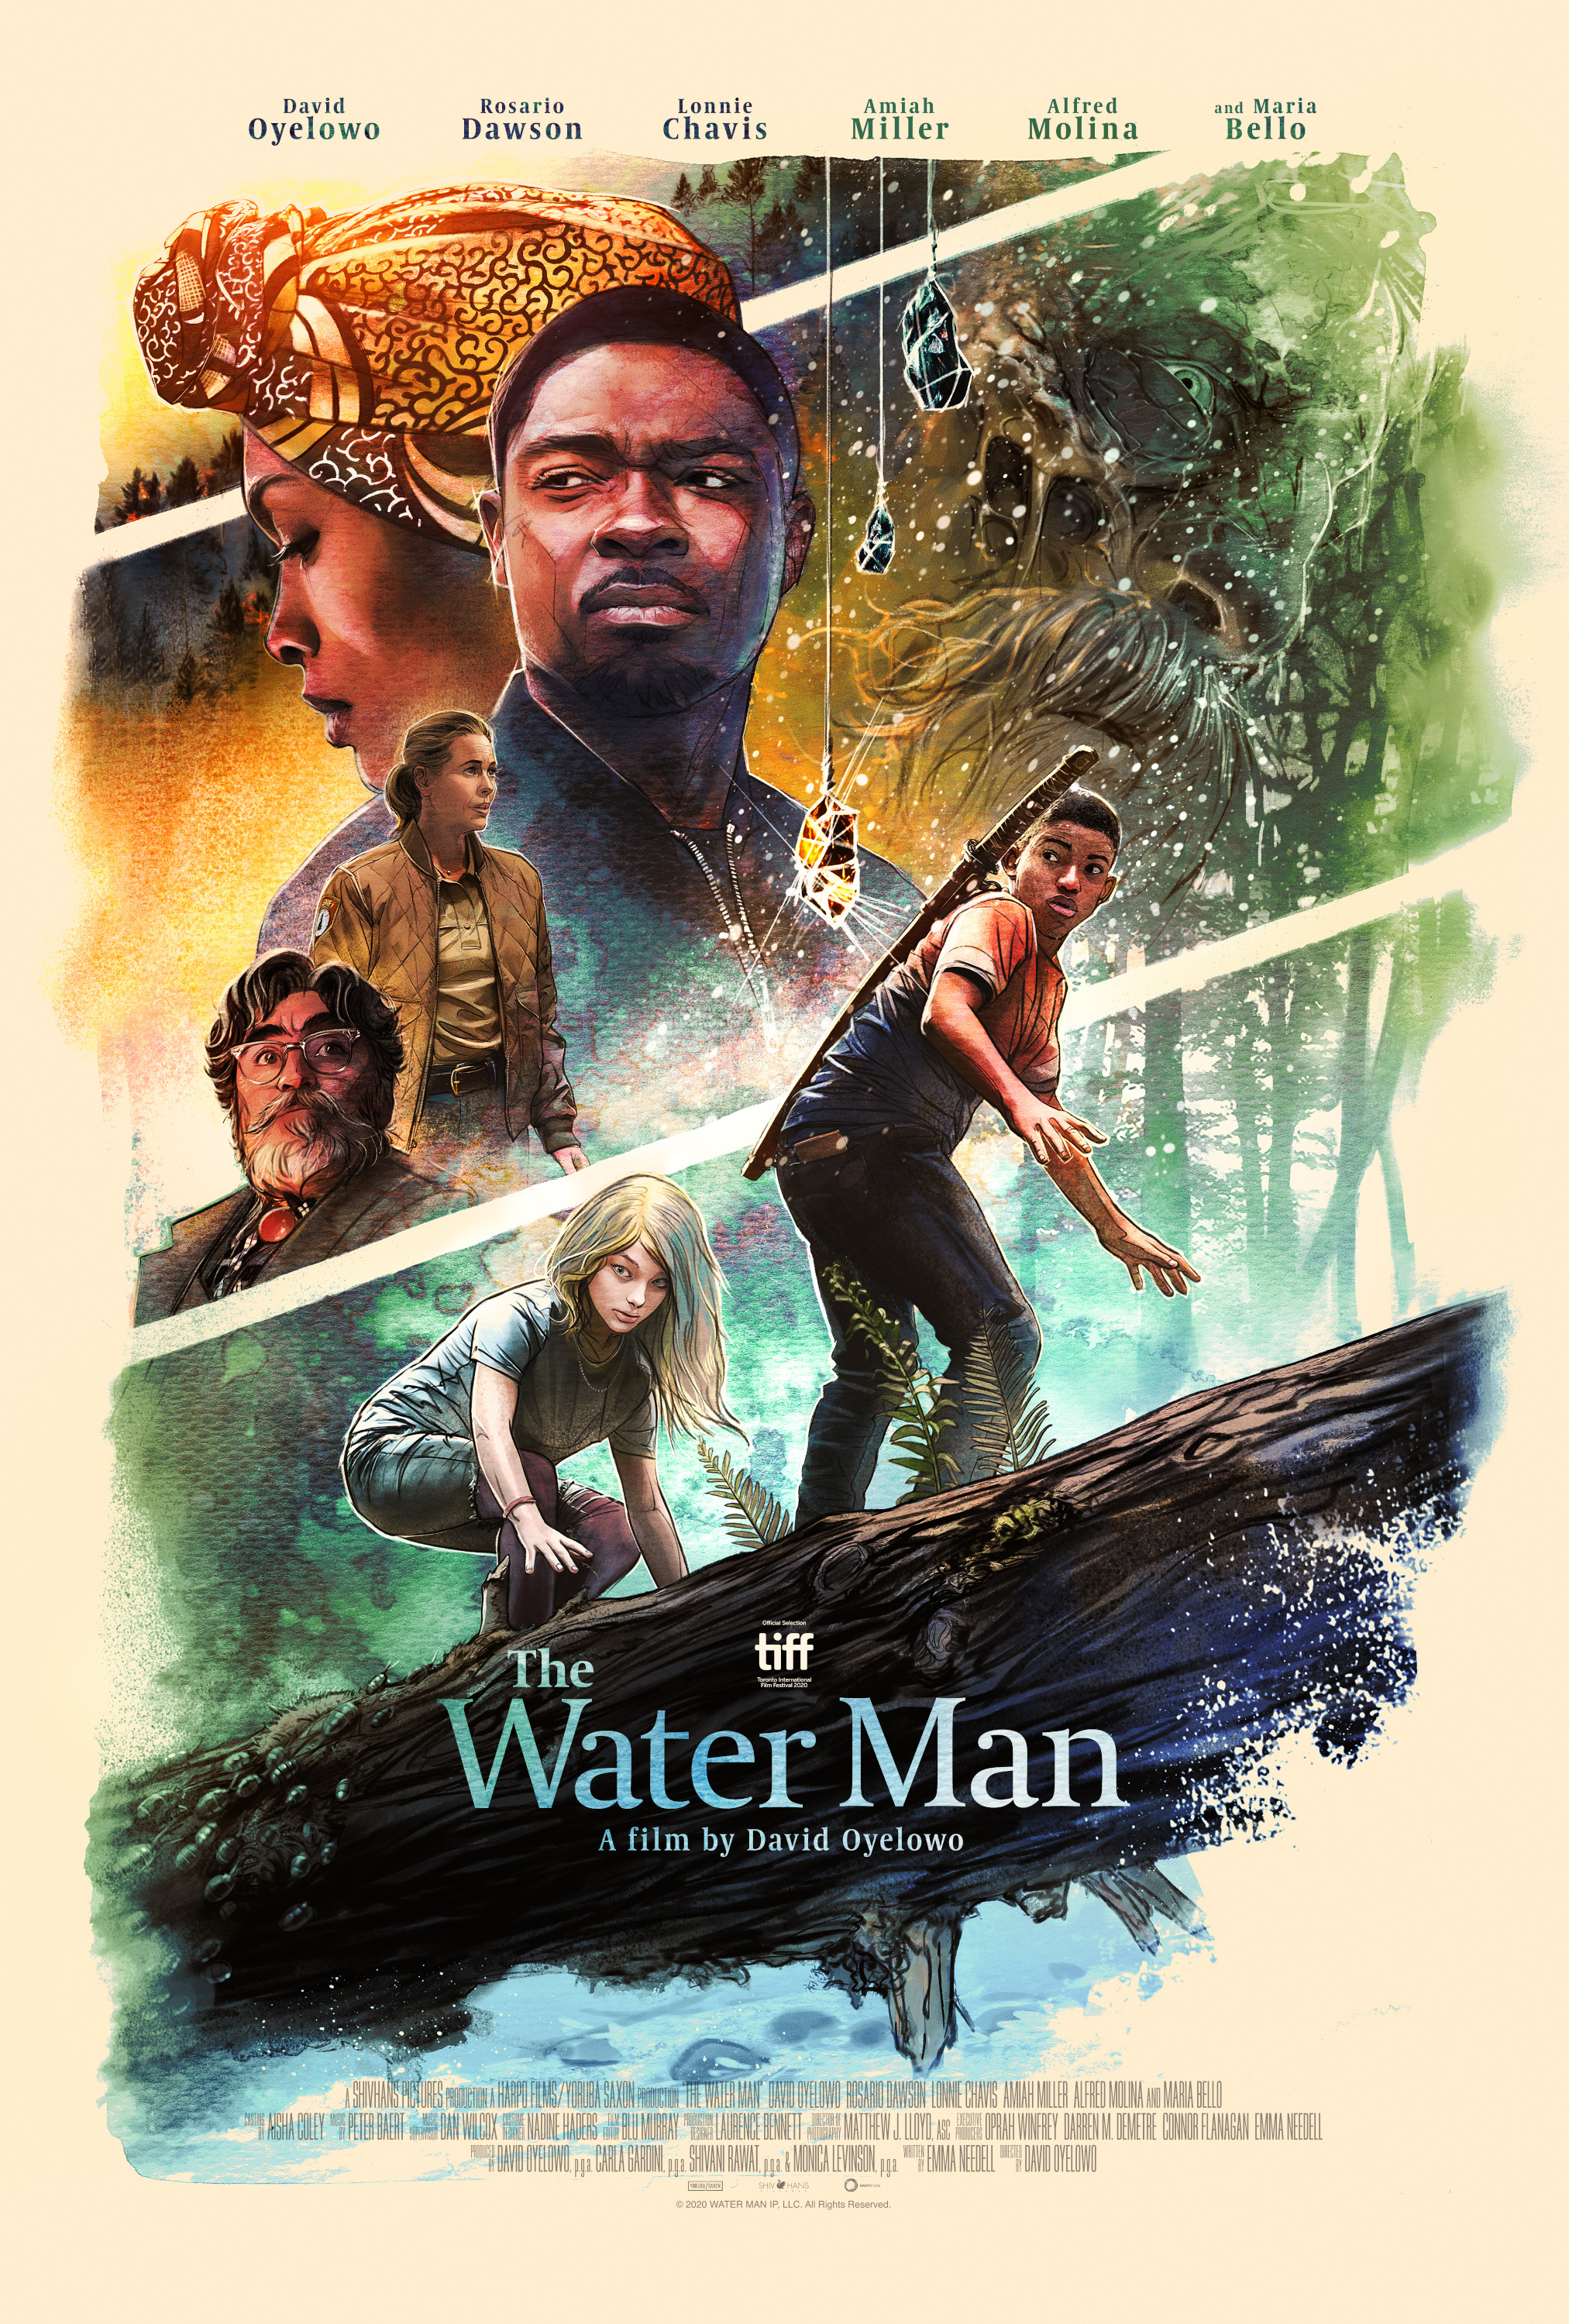 Stiahni si Filmy CZ/SK dabing The Water Man (2020)(CZ)[WebRip] = CSFD 39%